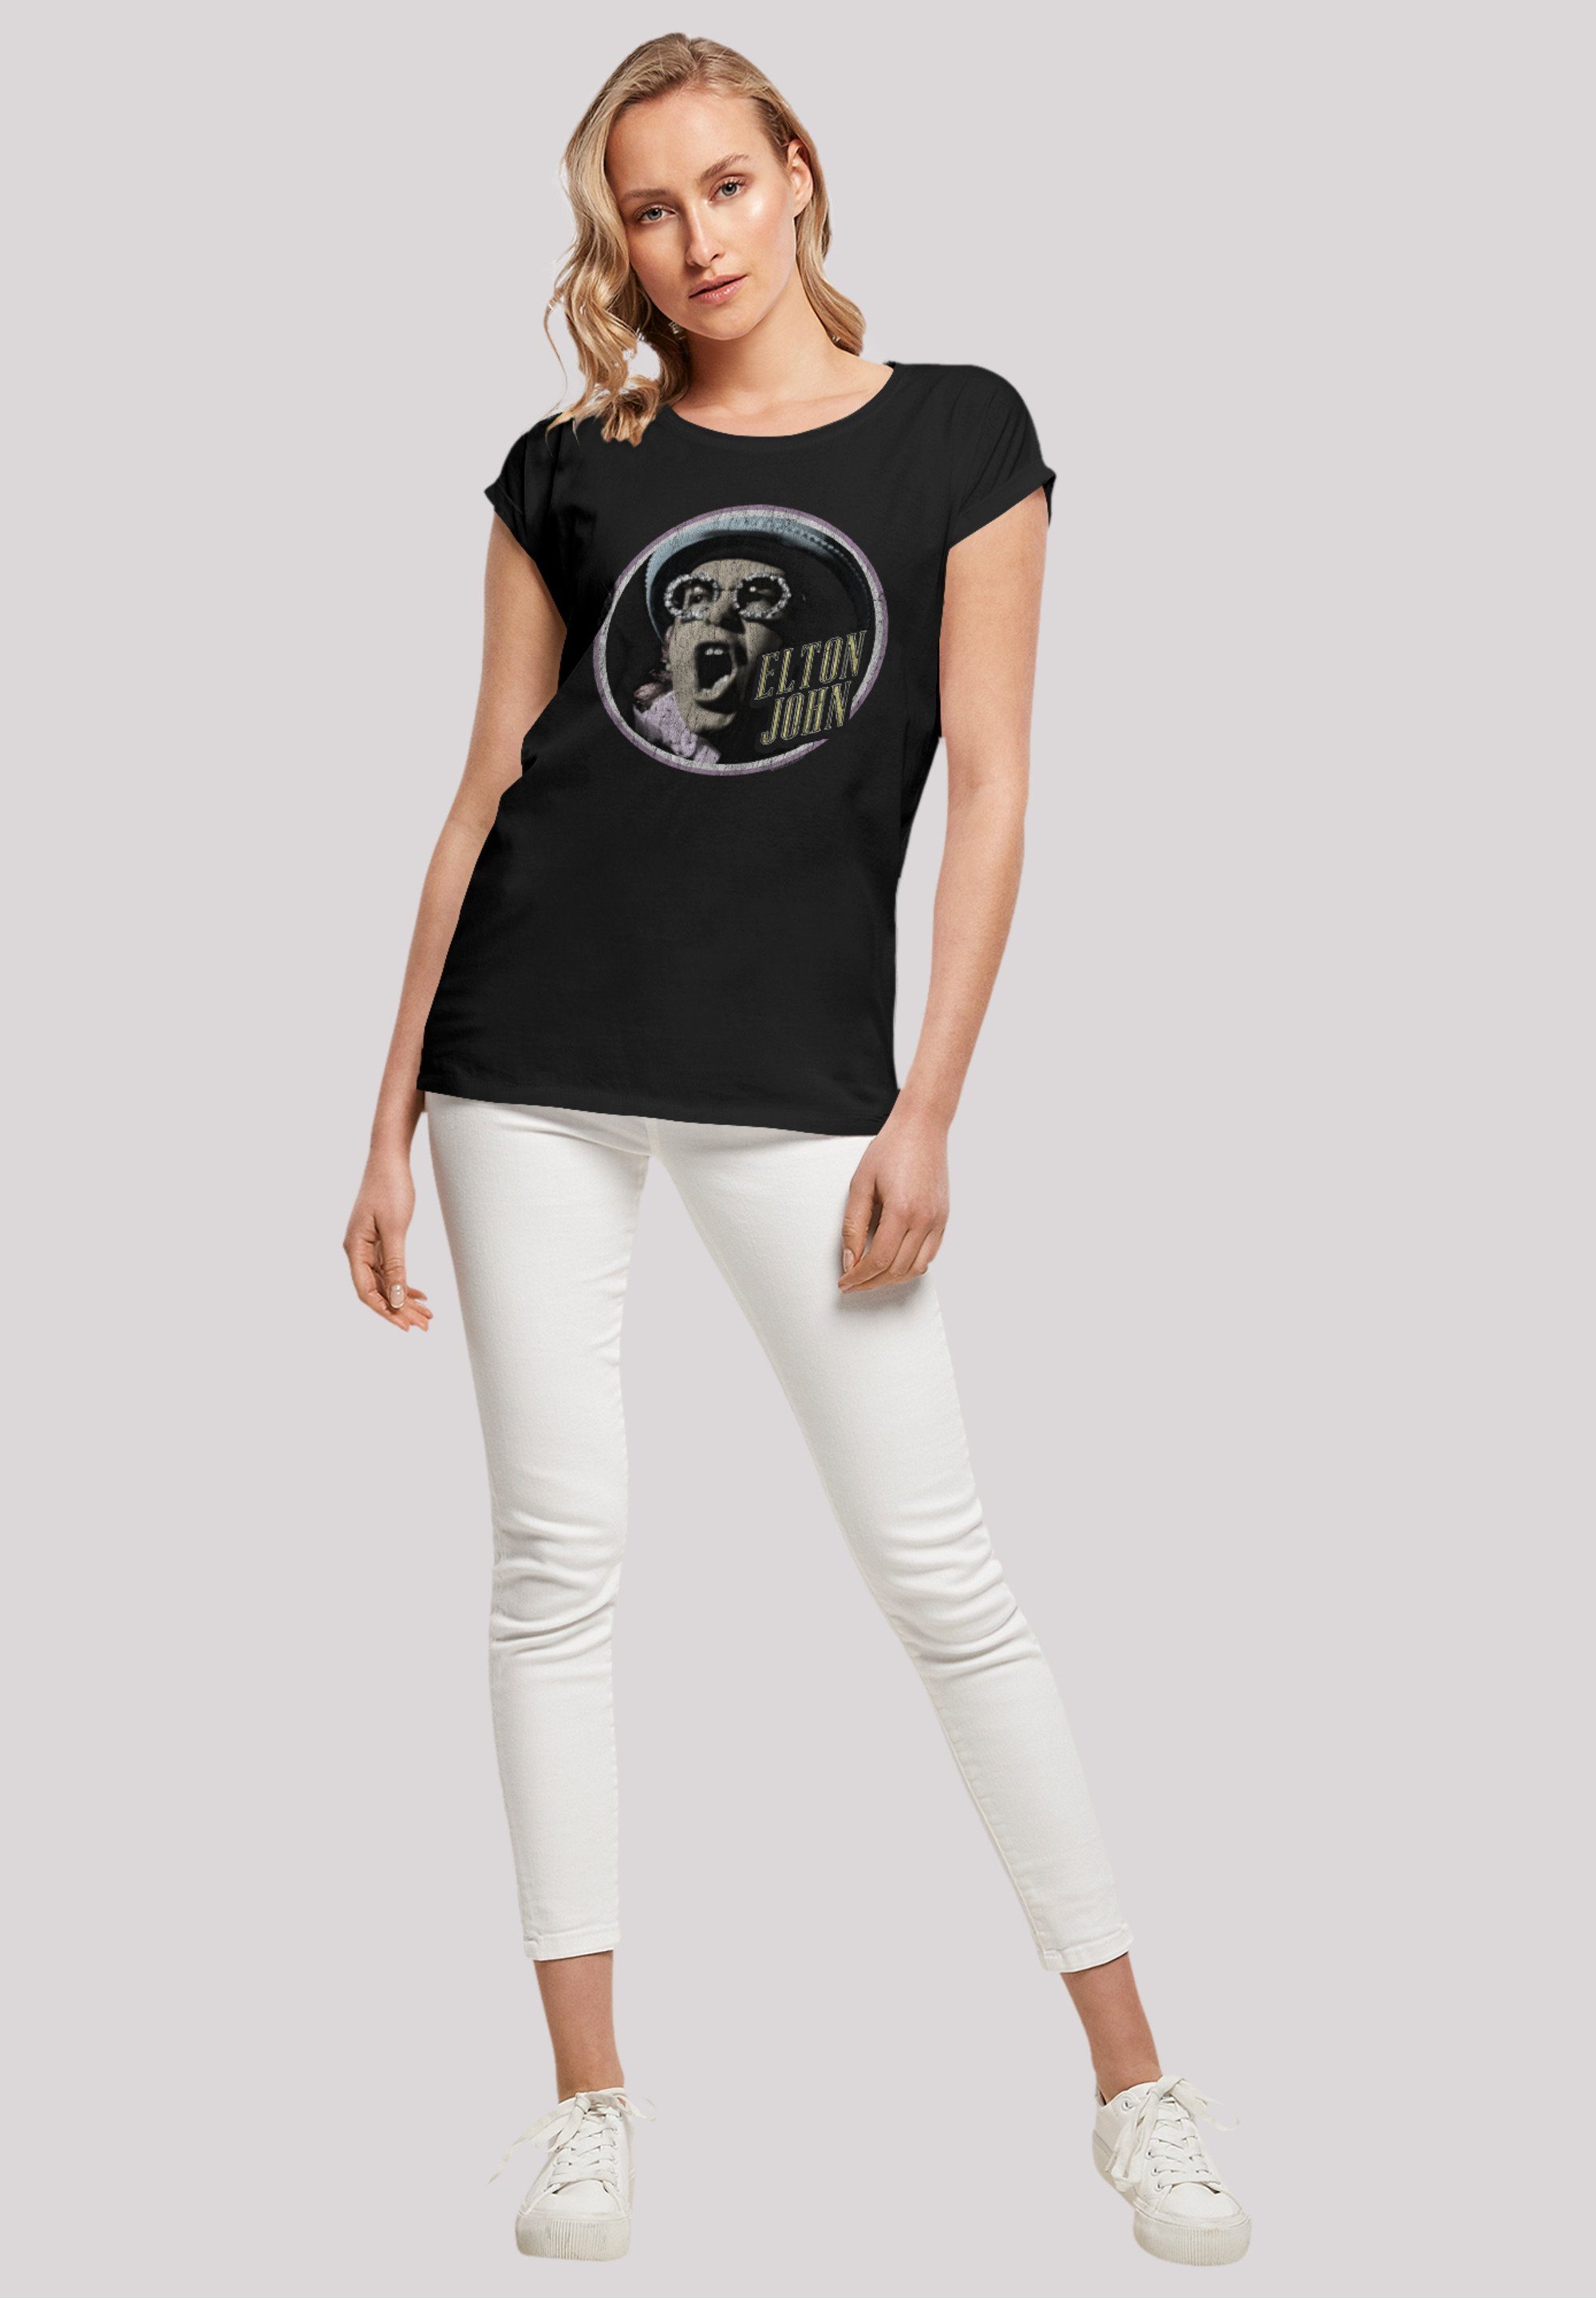 F4NT4STIC Circle Elton John T-Shirt Vintage schwarz Qualität Premium